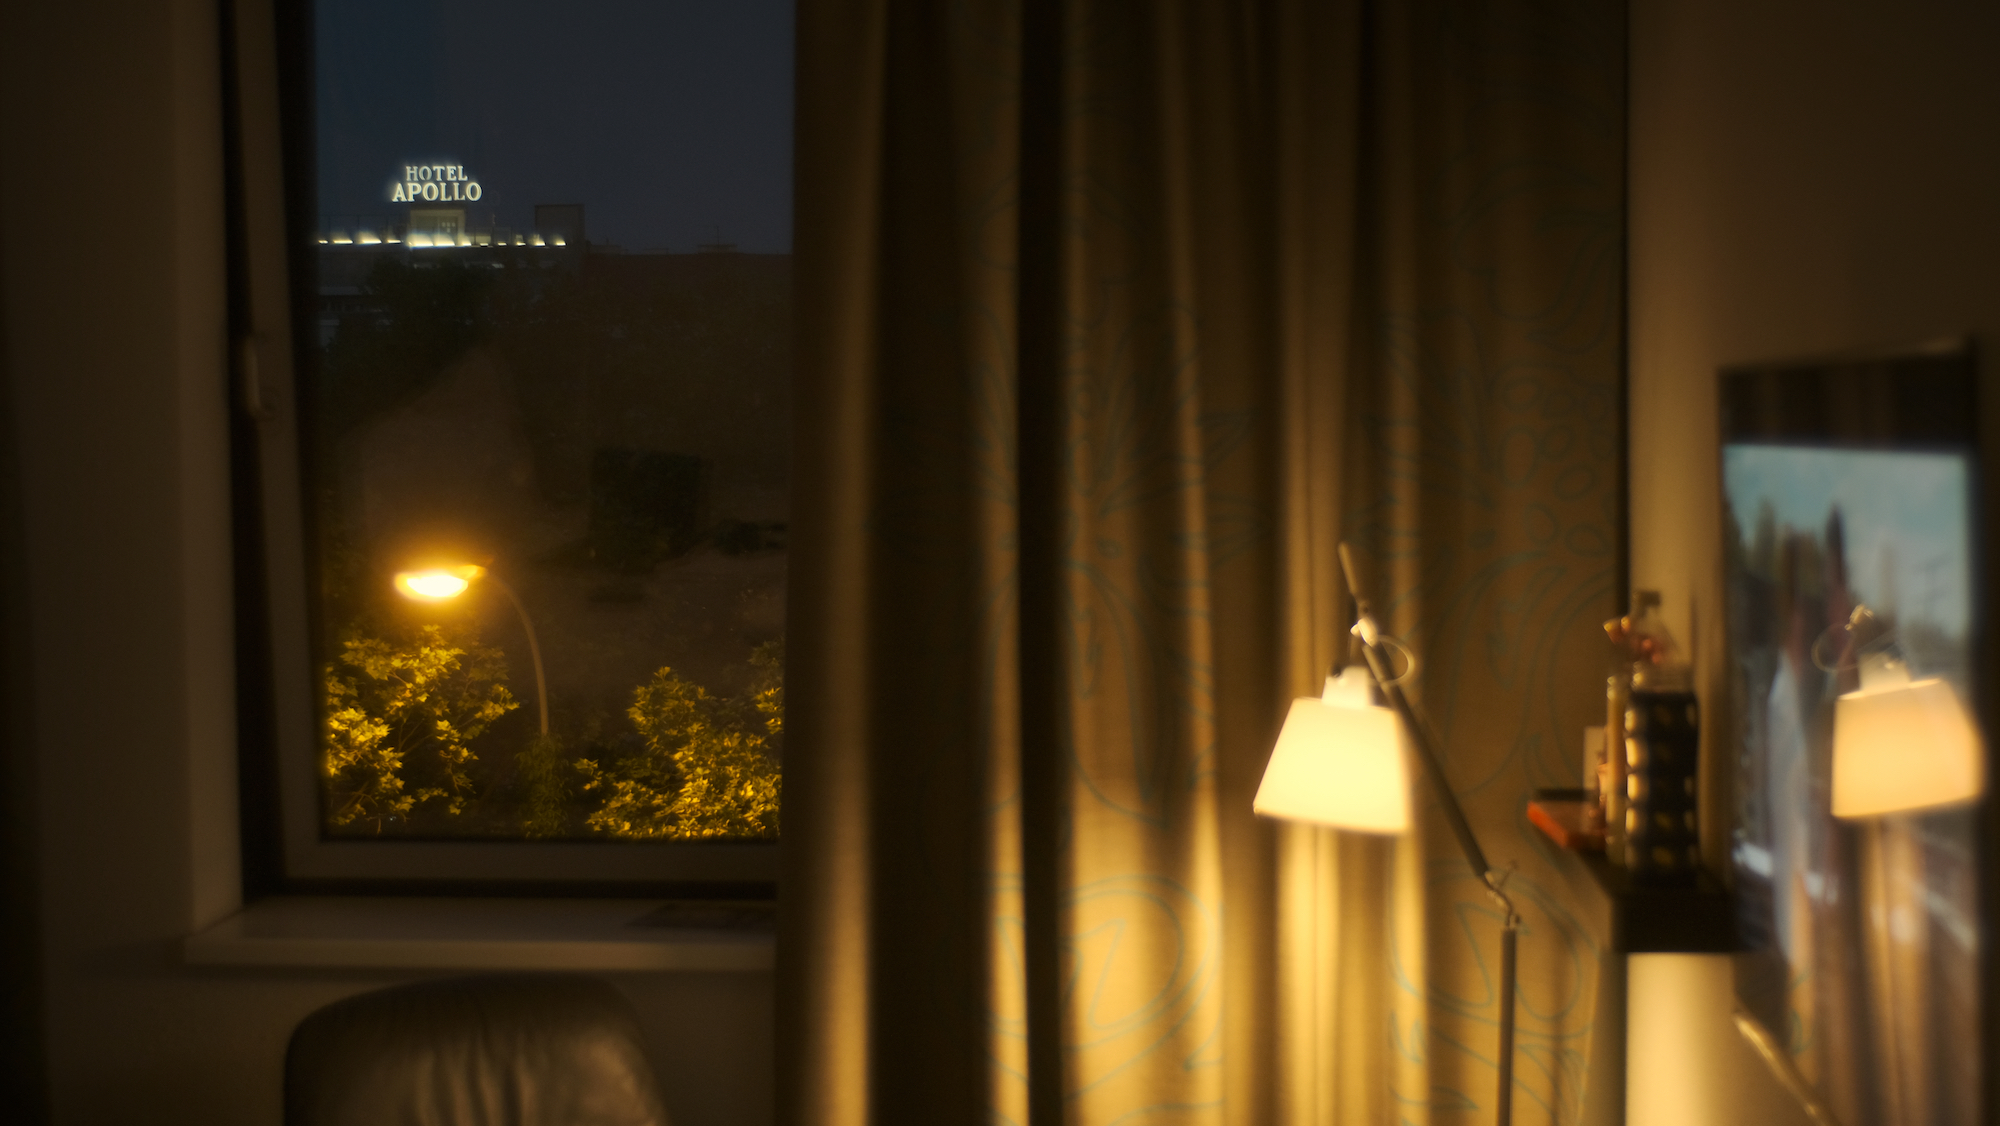  vienna-hotel-room-photography-matthias-grunsky 